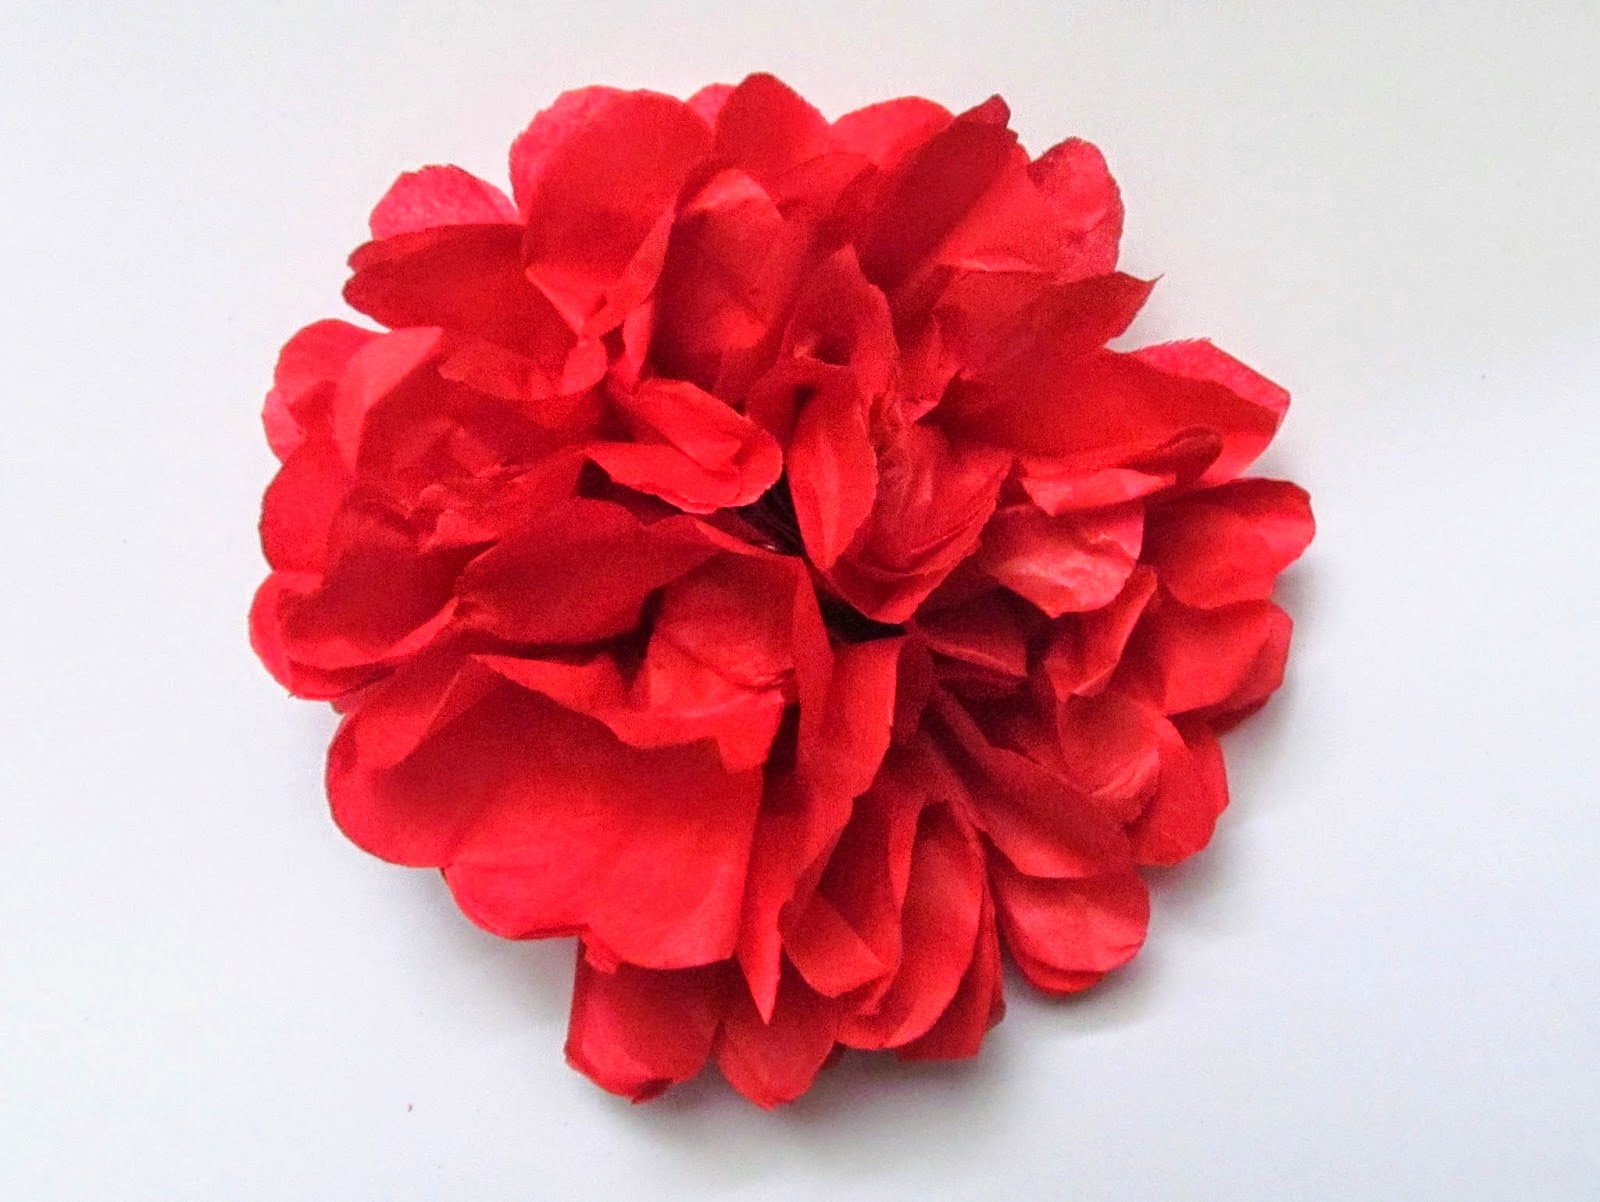 http://pinkflamingohandcrafting.blogspot.co.uk/2014/04/how-to-make-tissue-paper-flowers.html